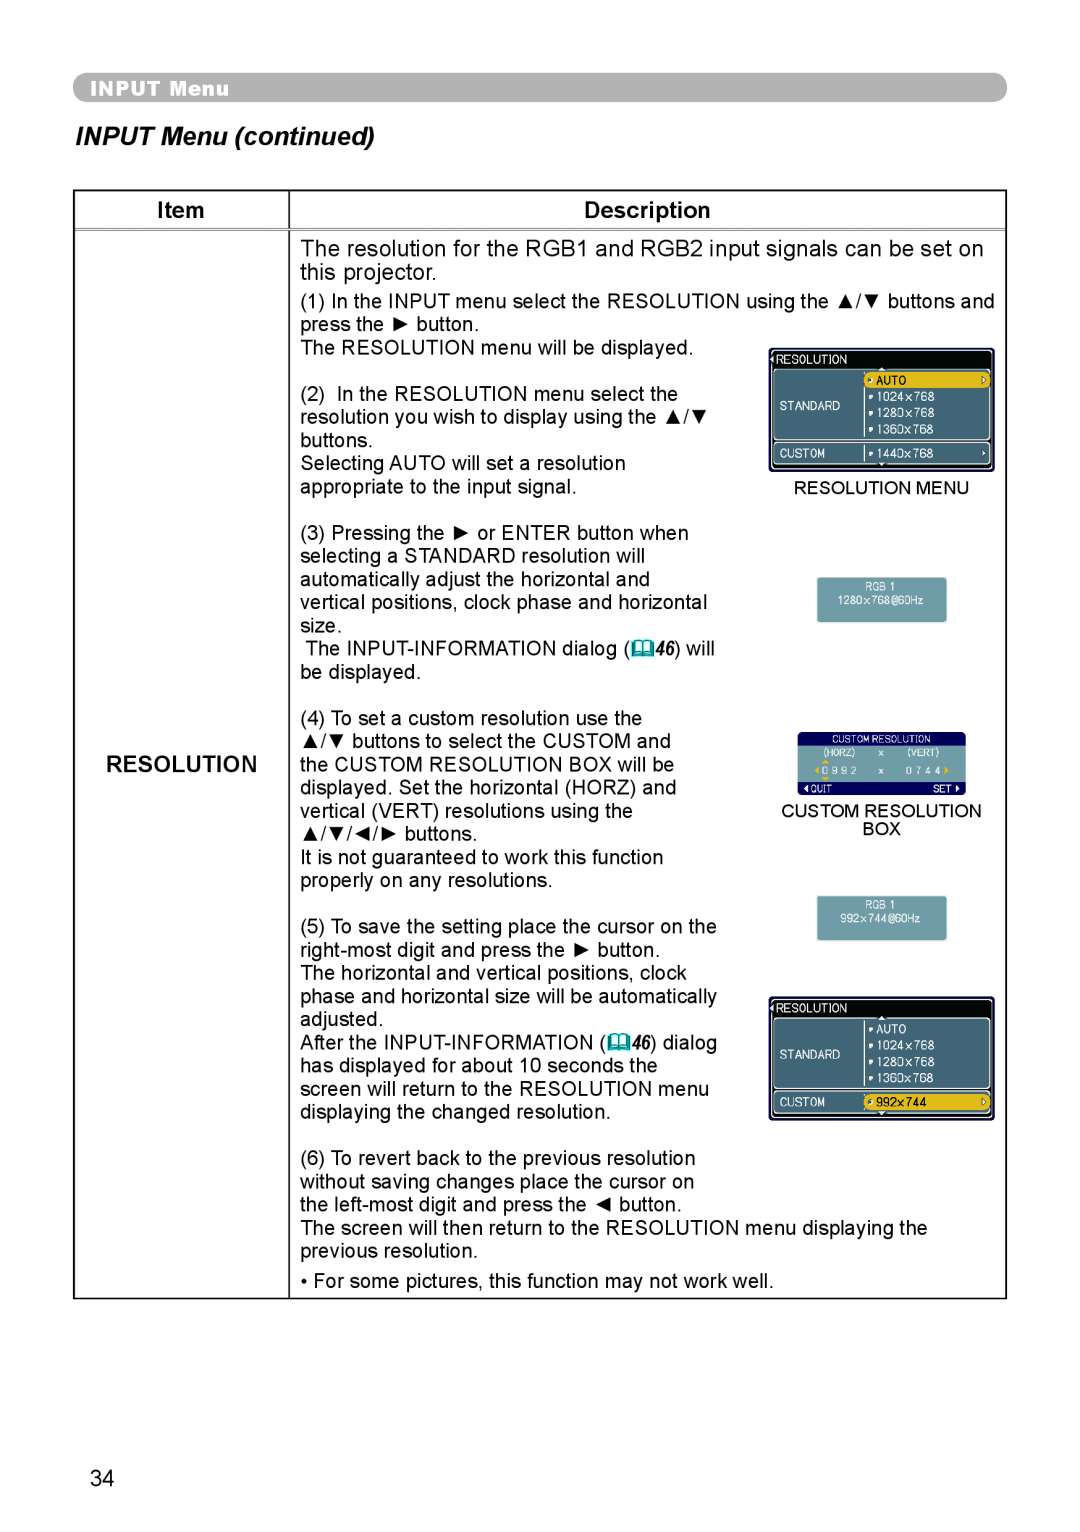 Planar PR9020 user manual INPUT Menu continued, Description, Resolution, The RESOLUTION menu will be displayed 